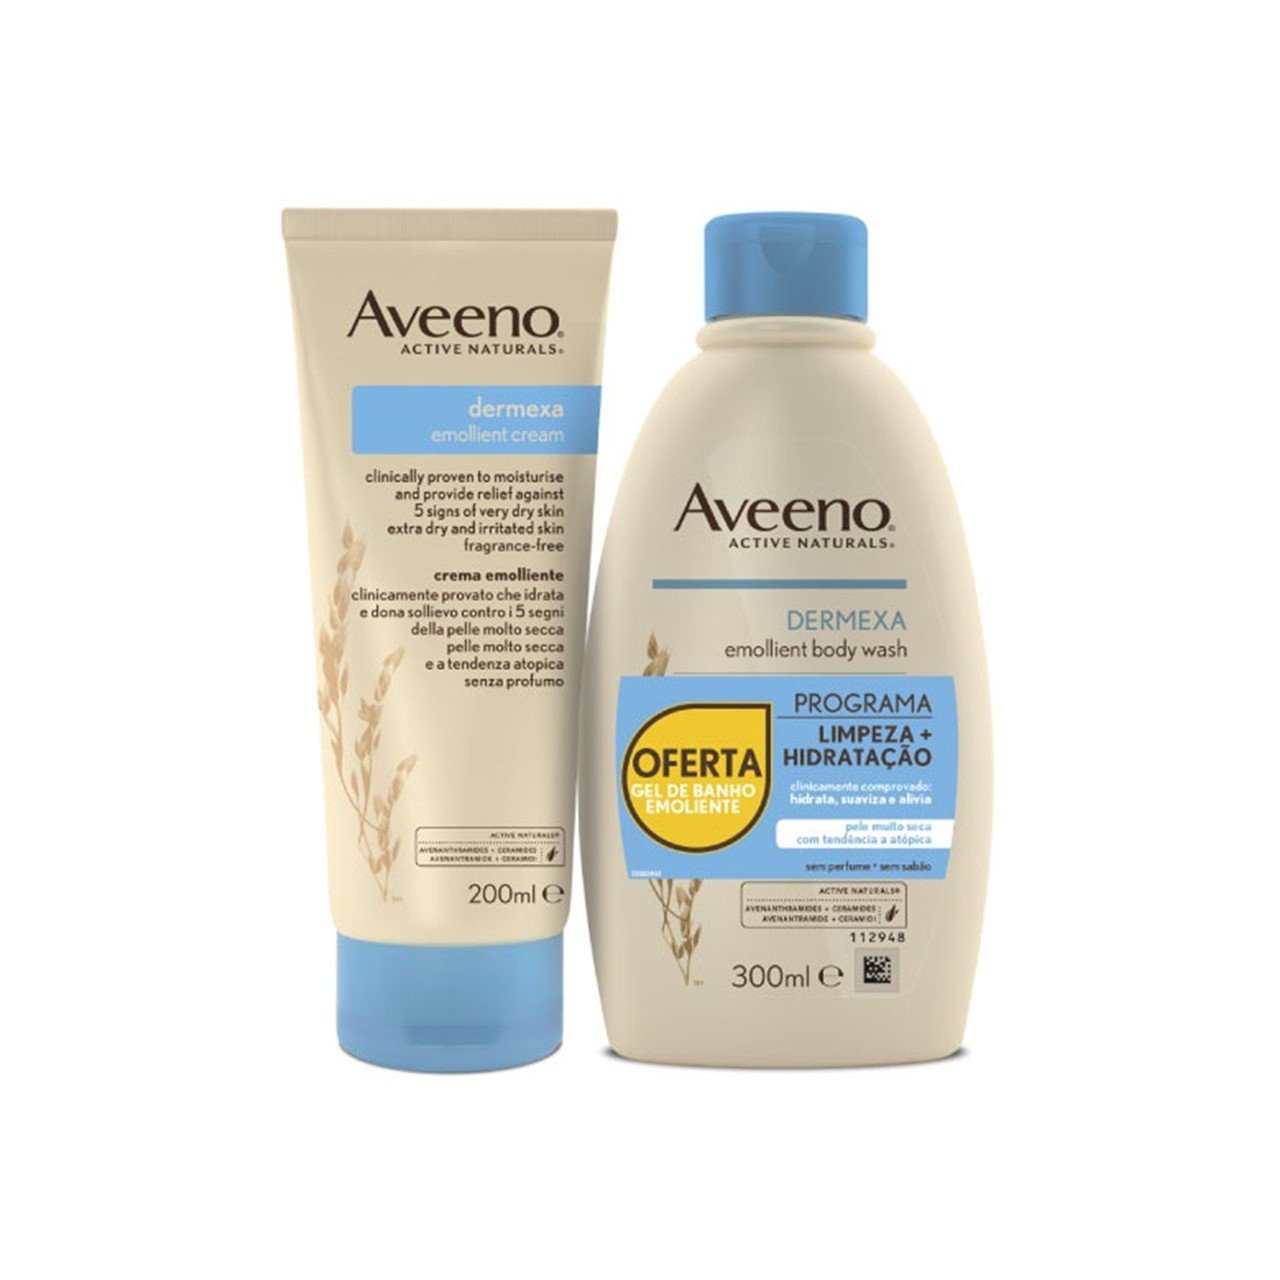 Aveeno Dermexa Emollient Cream 200ml + Emollient Body Wash 300ml